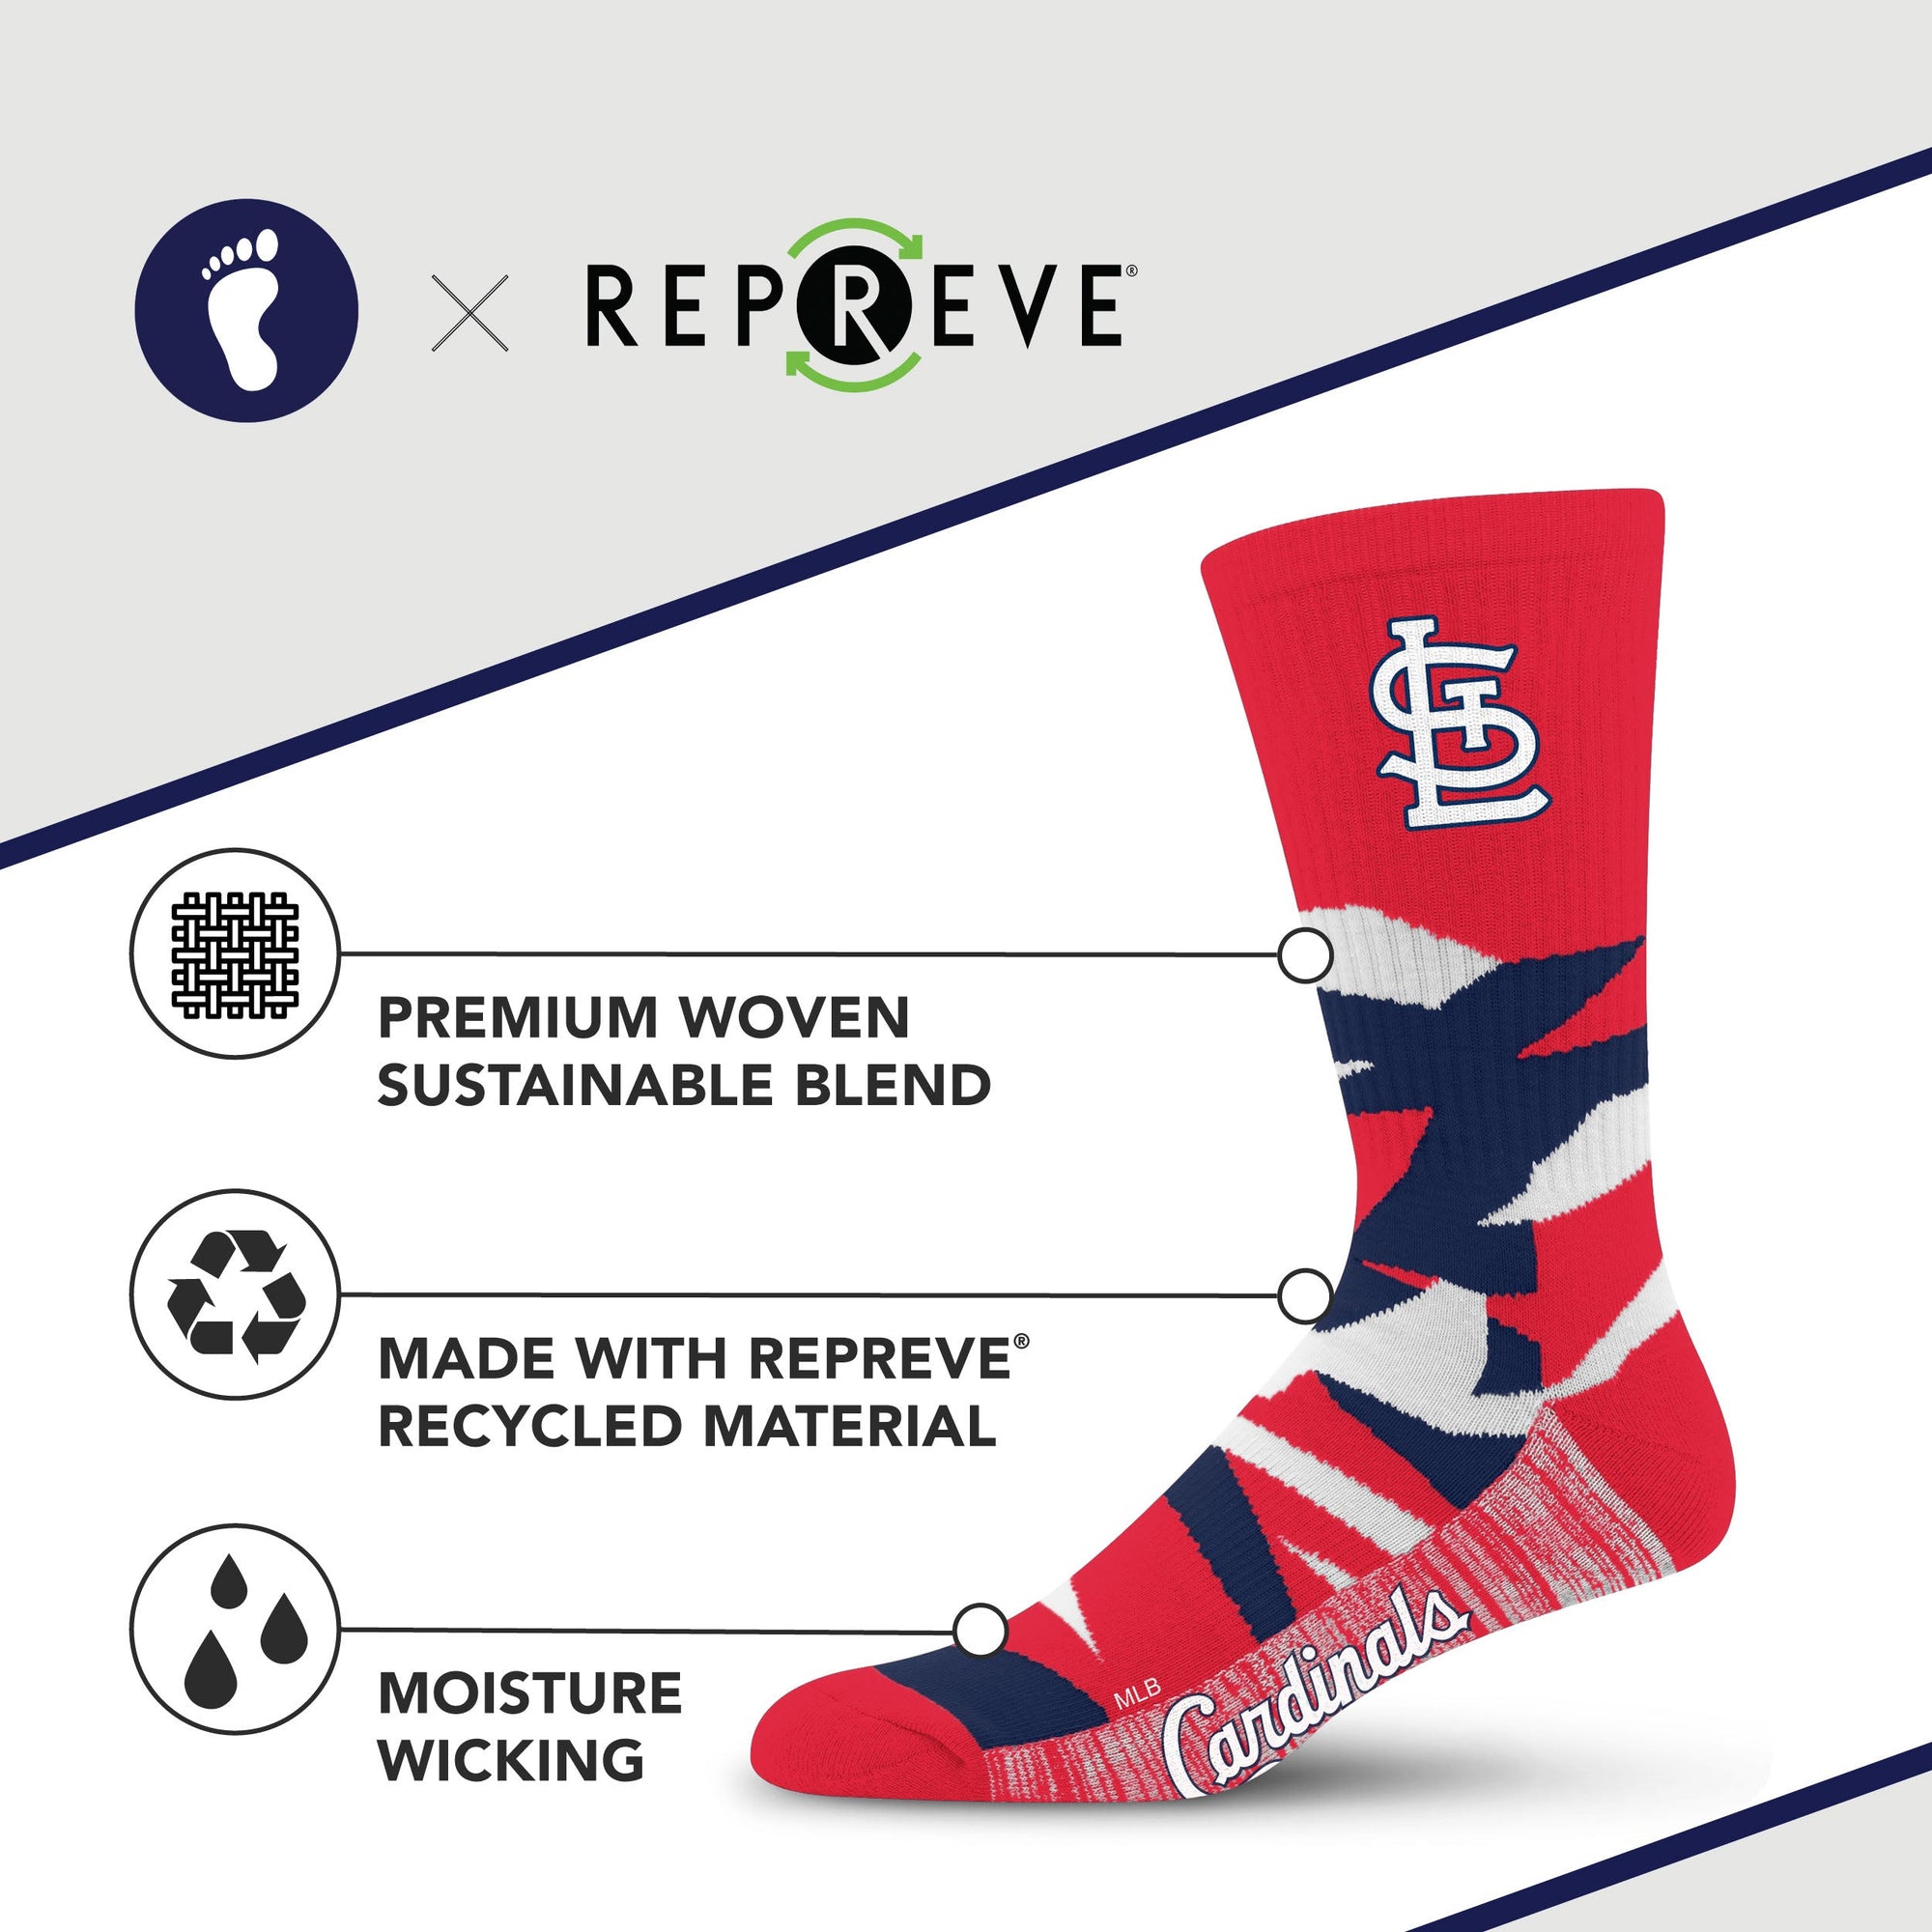 St. Louis Cardinals Breakout Premium Crew Socks